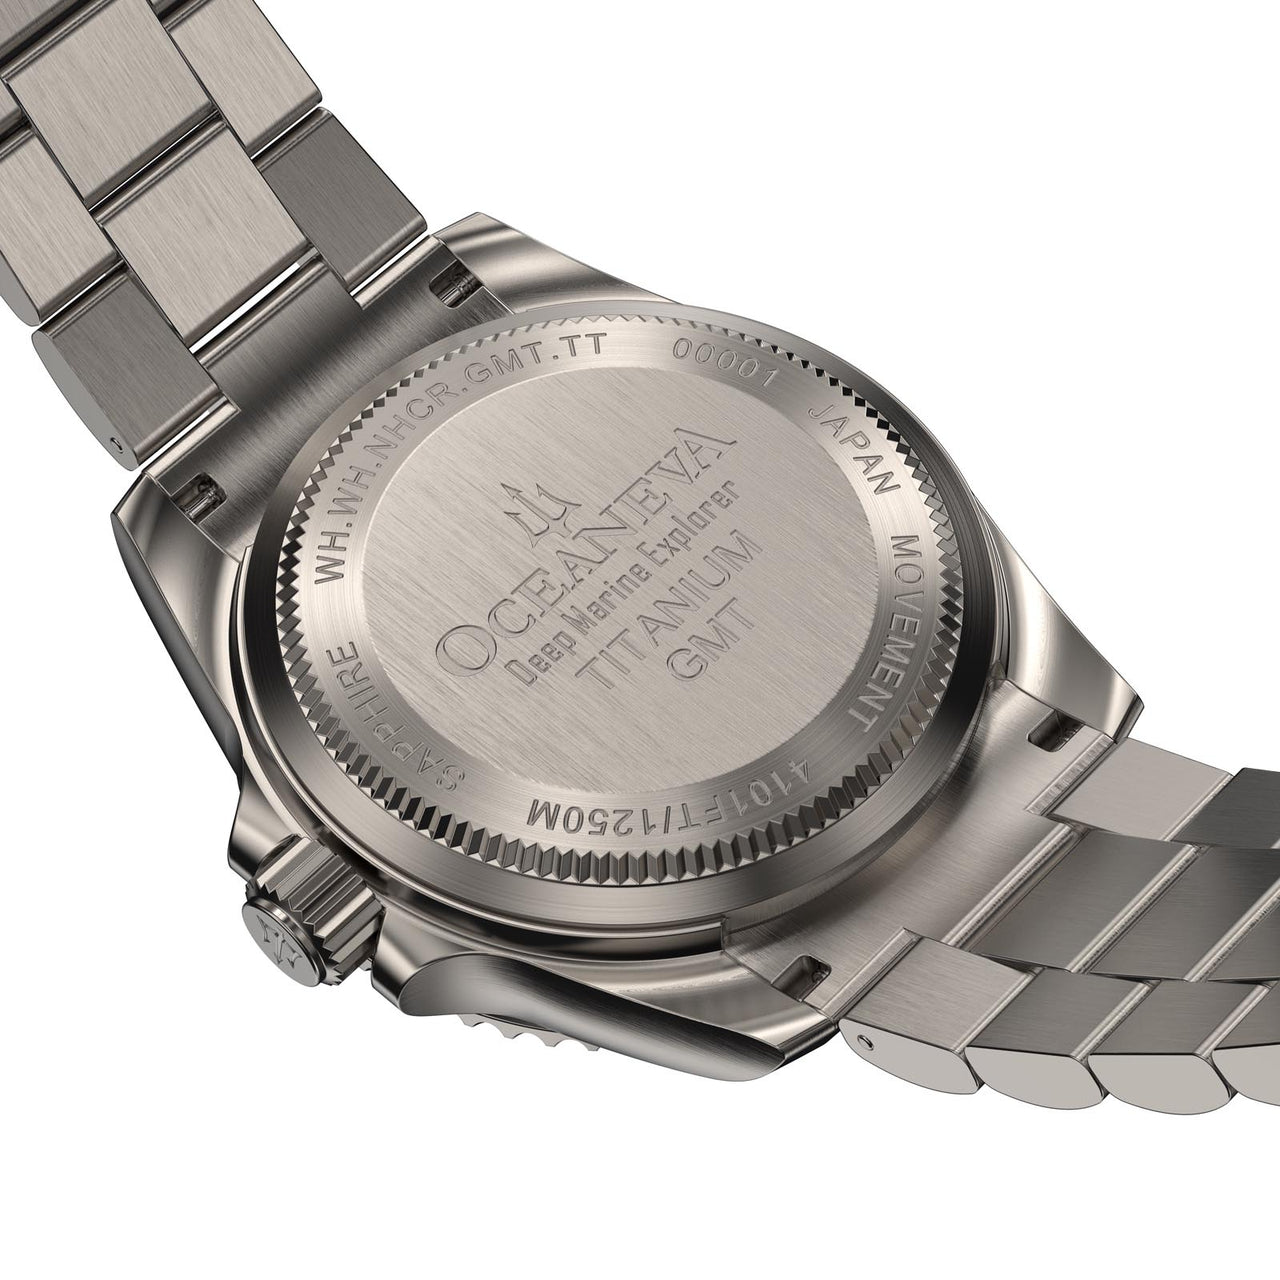 Oceaneva™ Men's GMT TITANIUM Automatic Deep Marine Explorer 1250M White Ceramic Bezel Watch